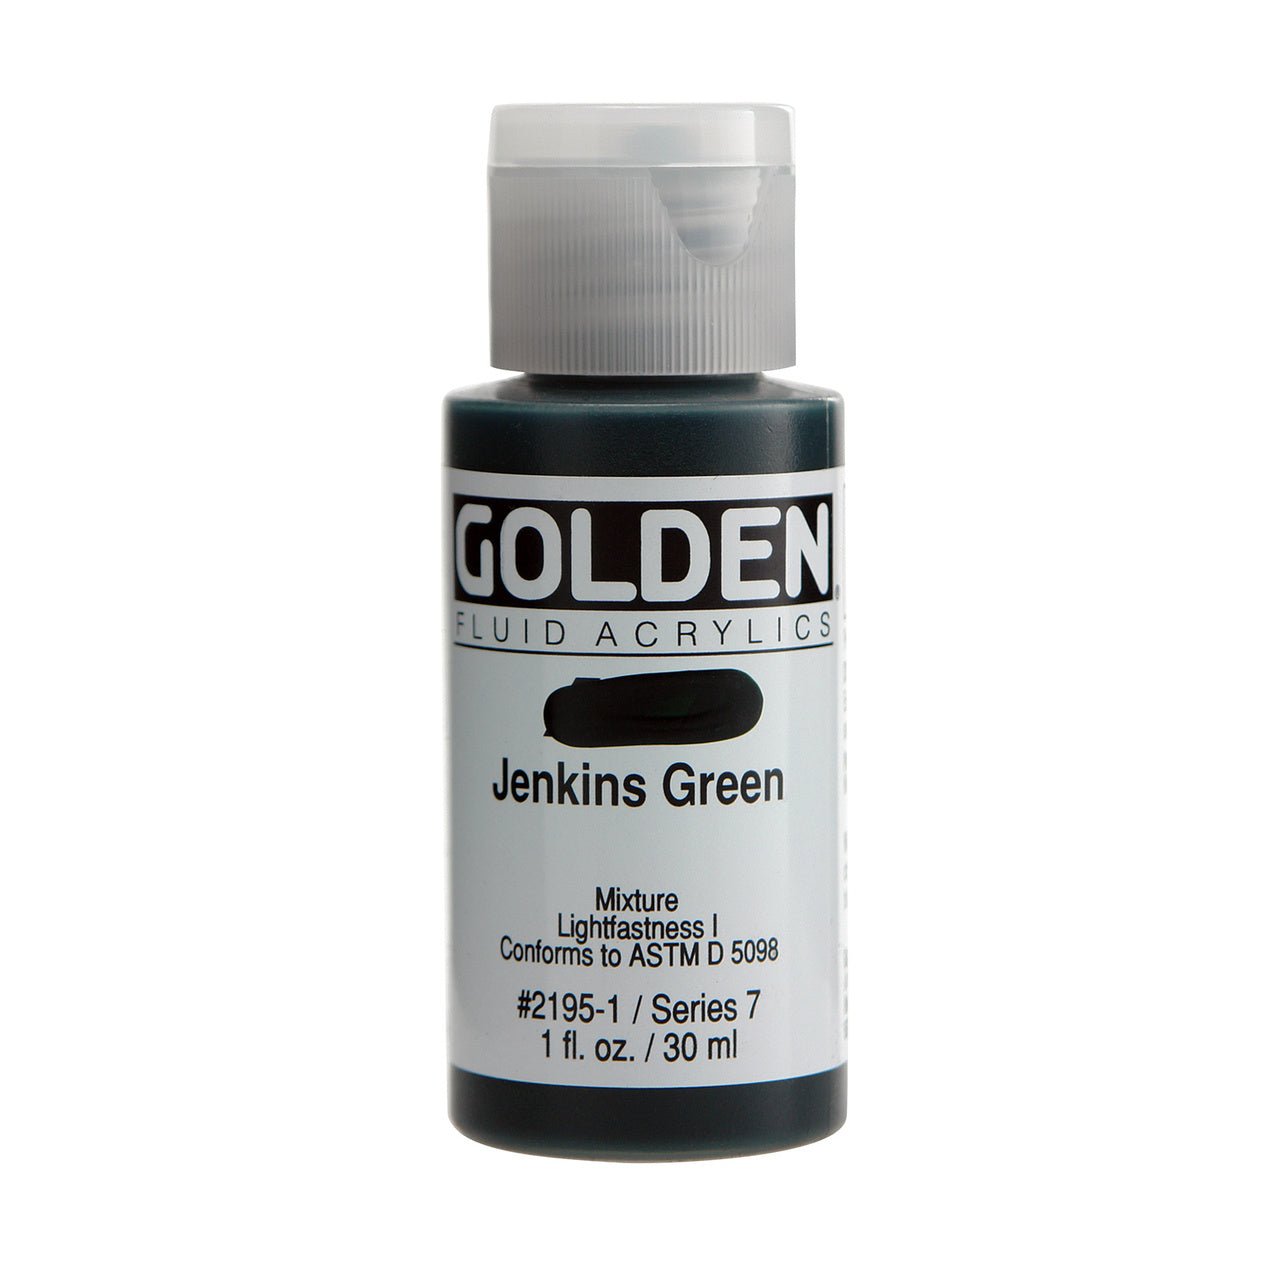 Golden Fluid Acrylic Jenkins Green 1 oz - merriartist.com